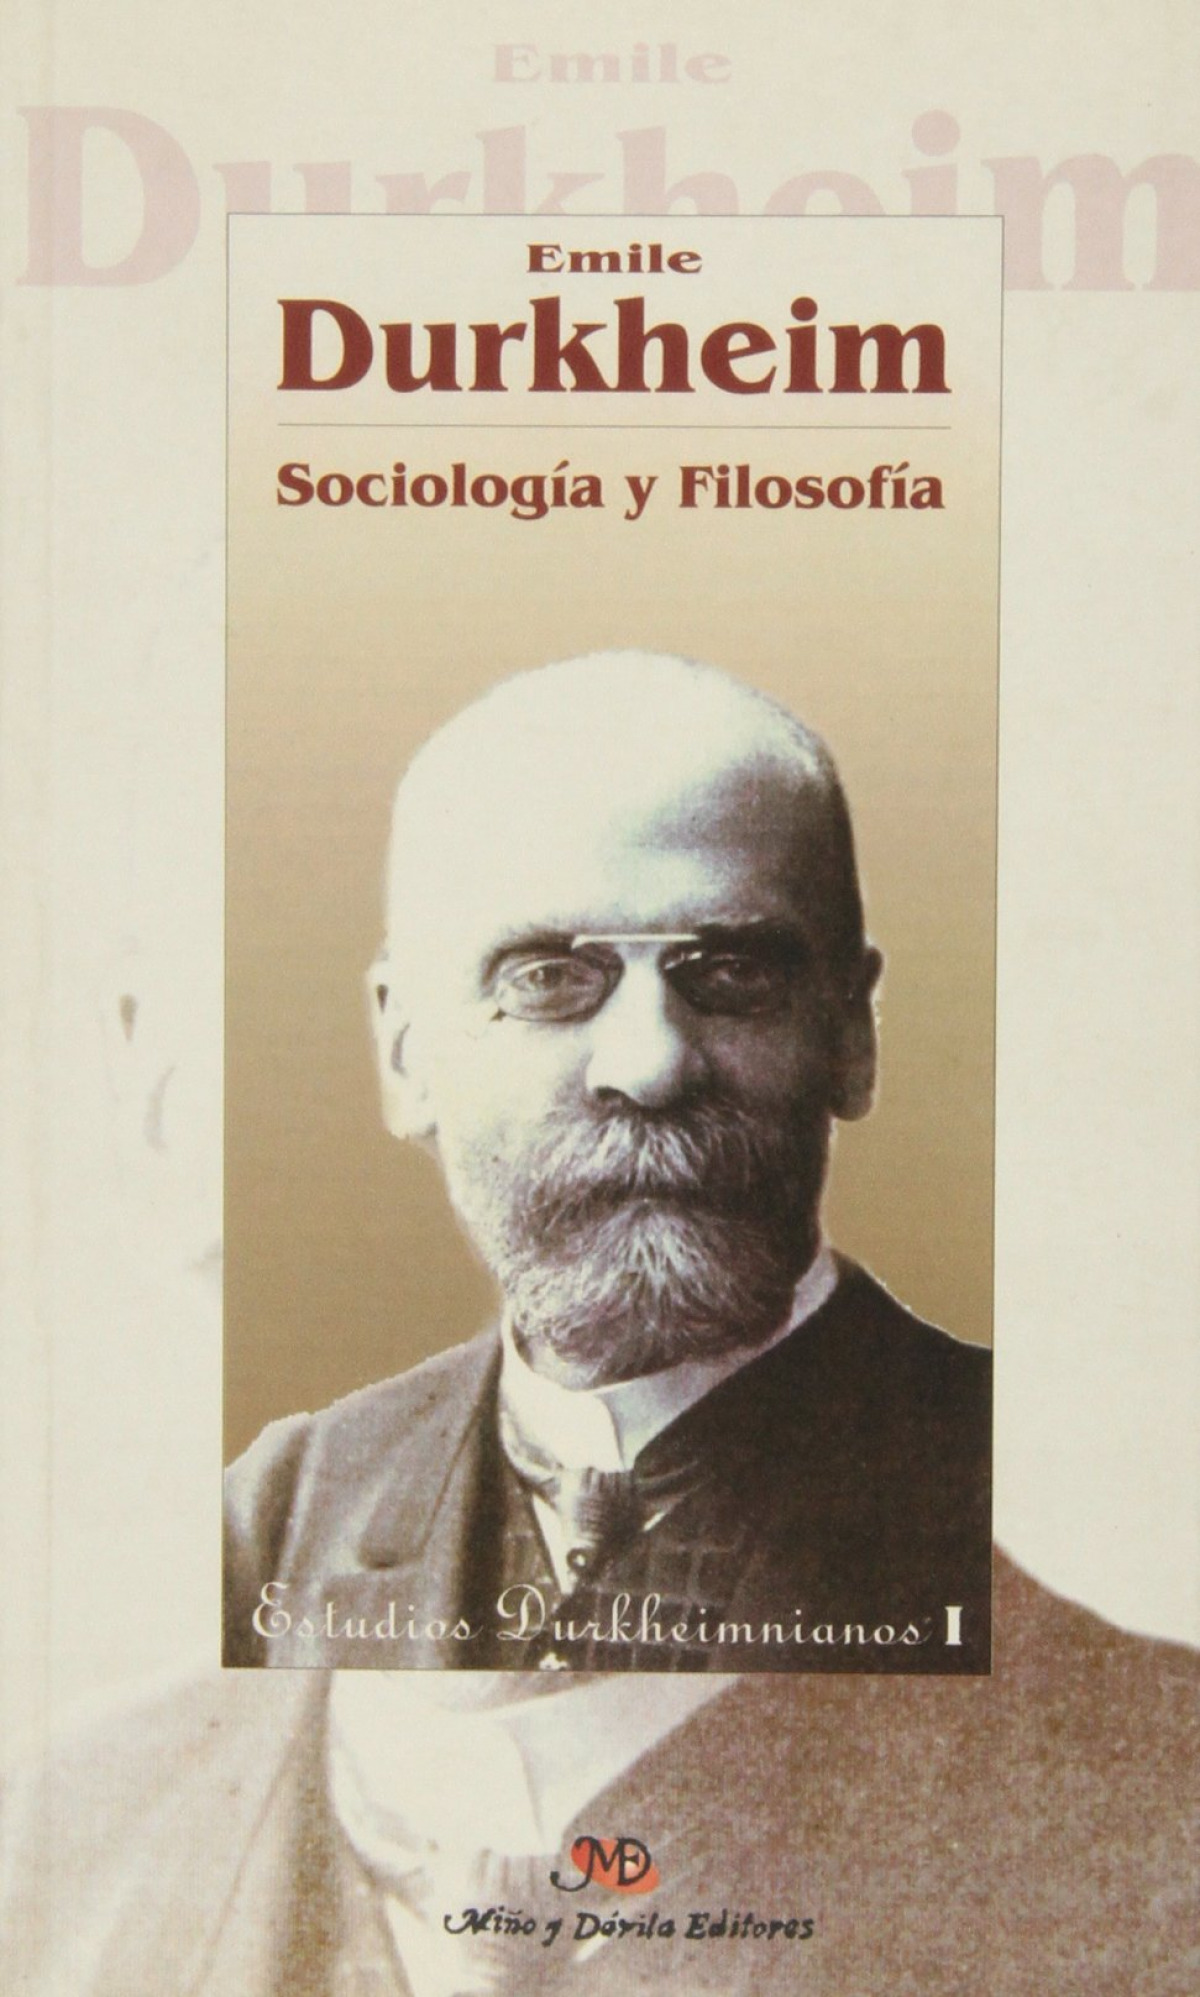 Sociologia y filosofia - Durkheim, Emile